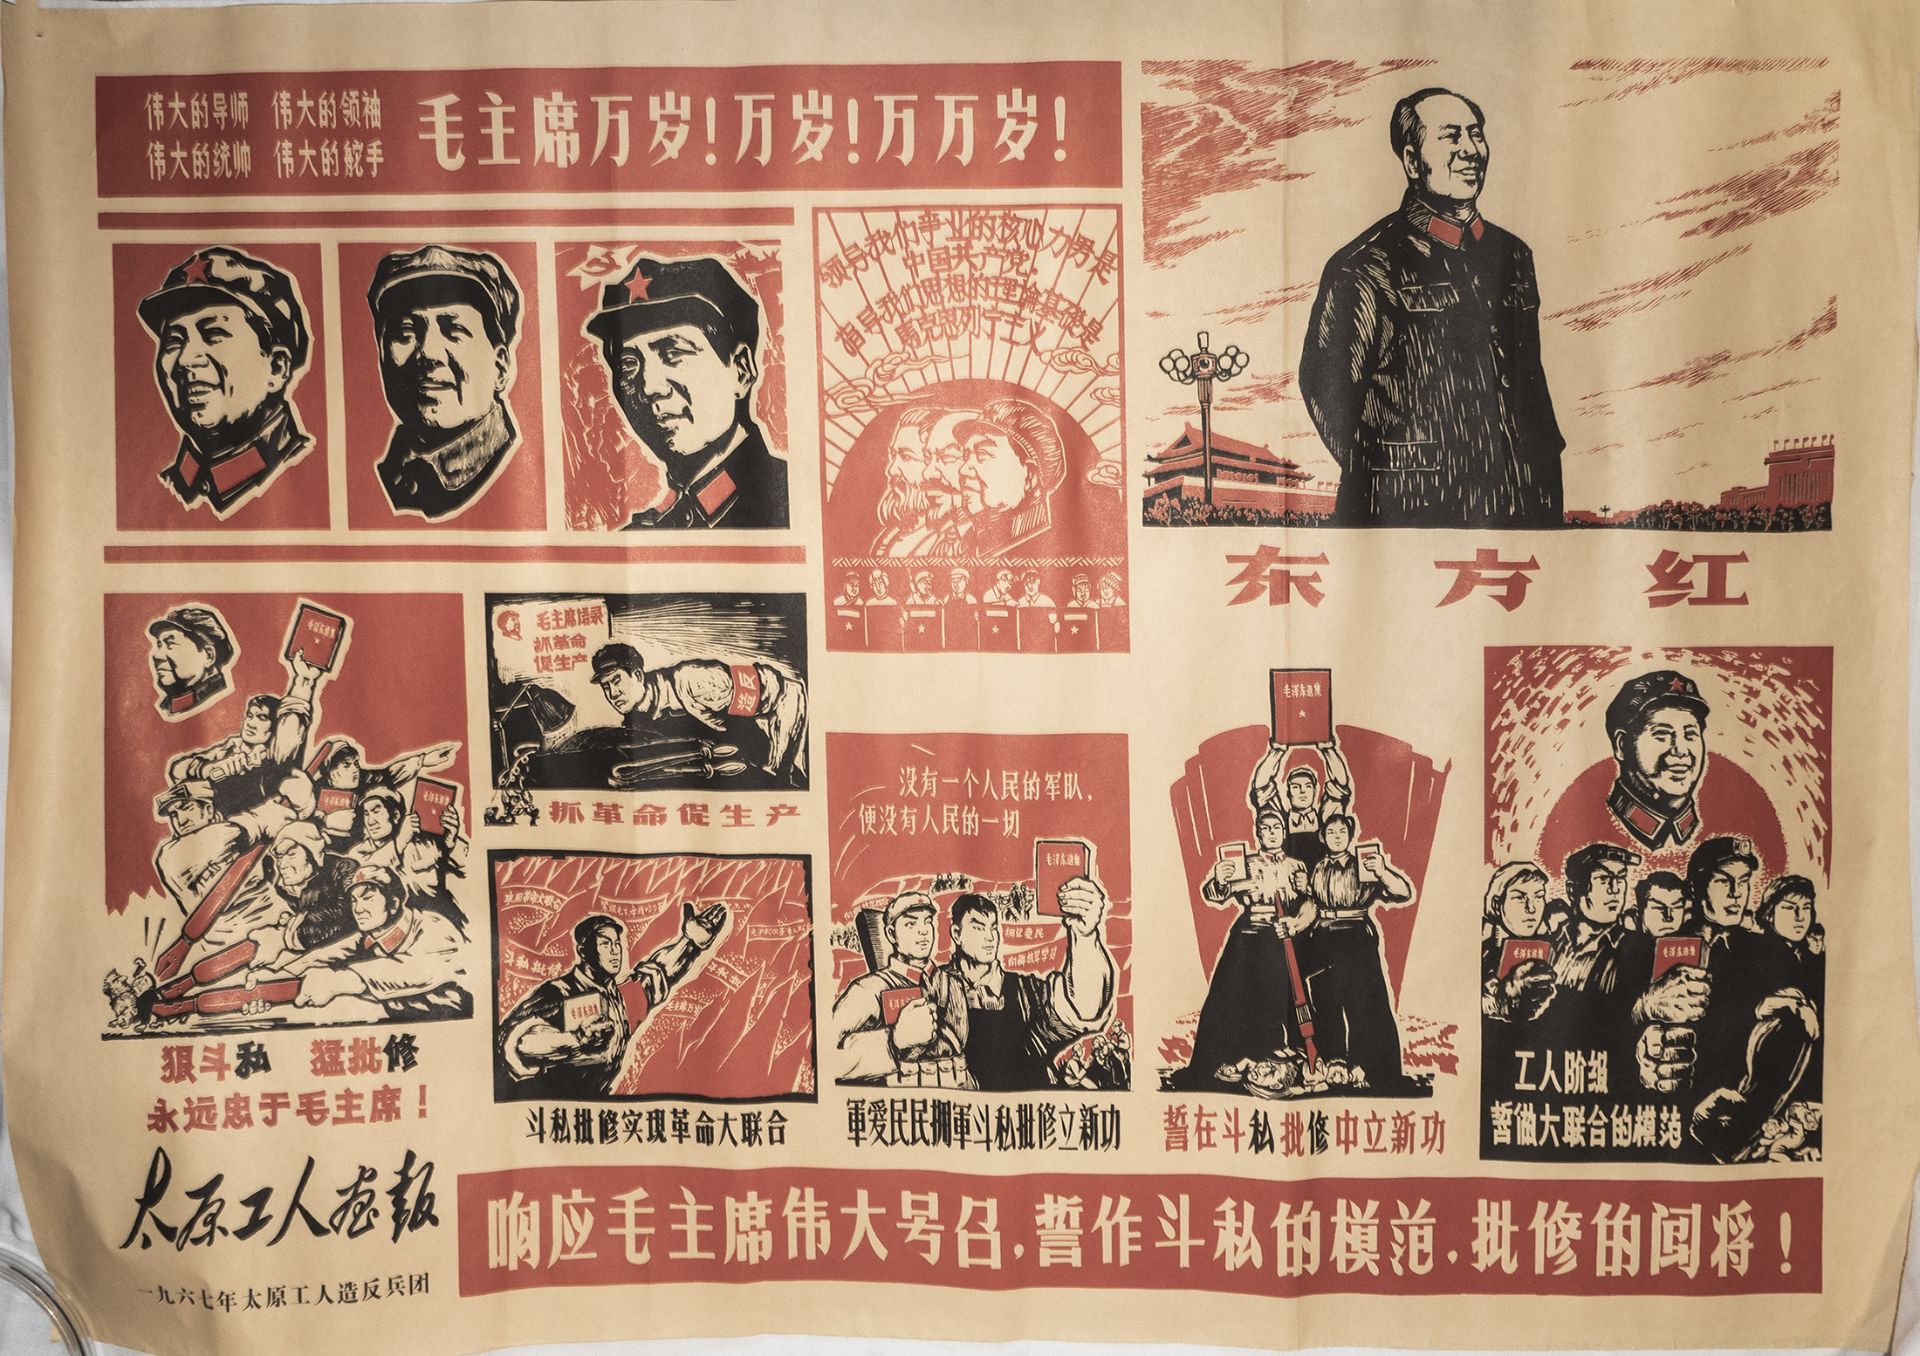 China 1967/68, Lot Mao - Plakate, Propaganda - Plakate auf gelben dünnen Papier, farbig bedruckt, - Image 3 of 3